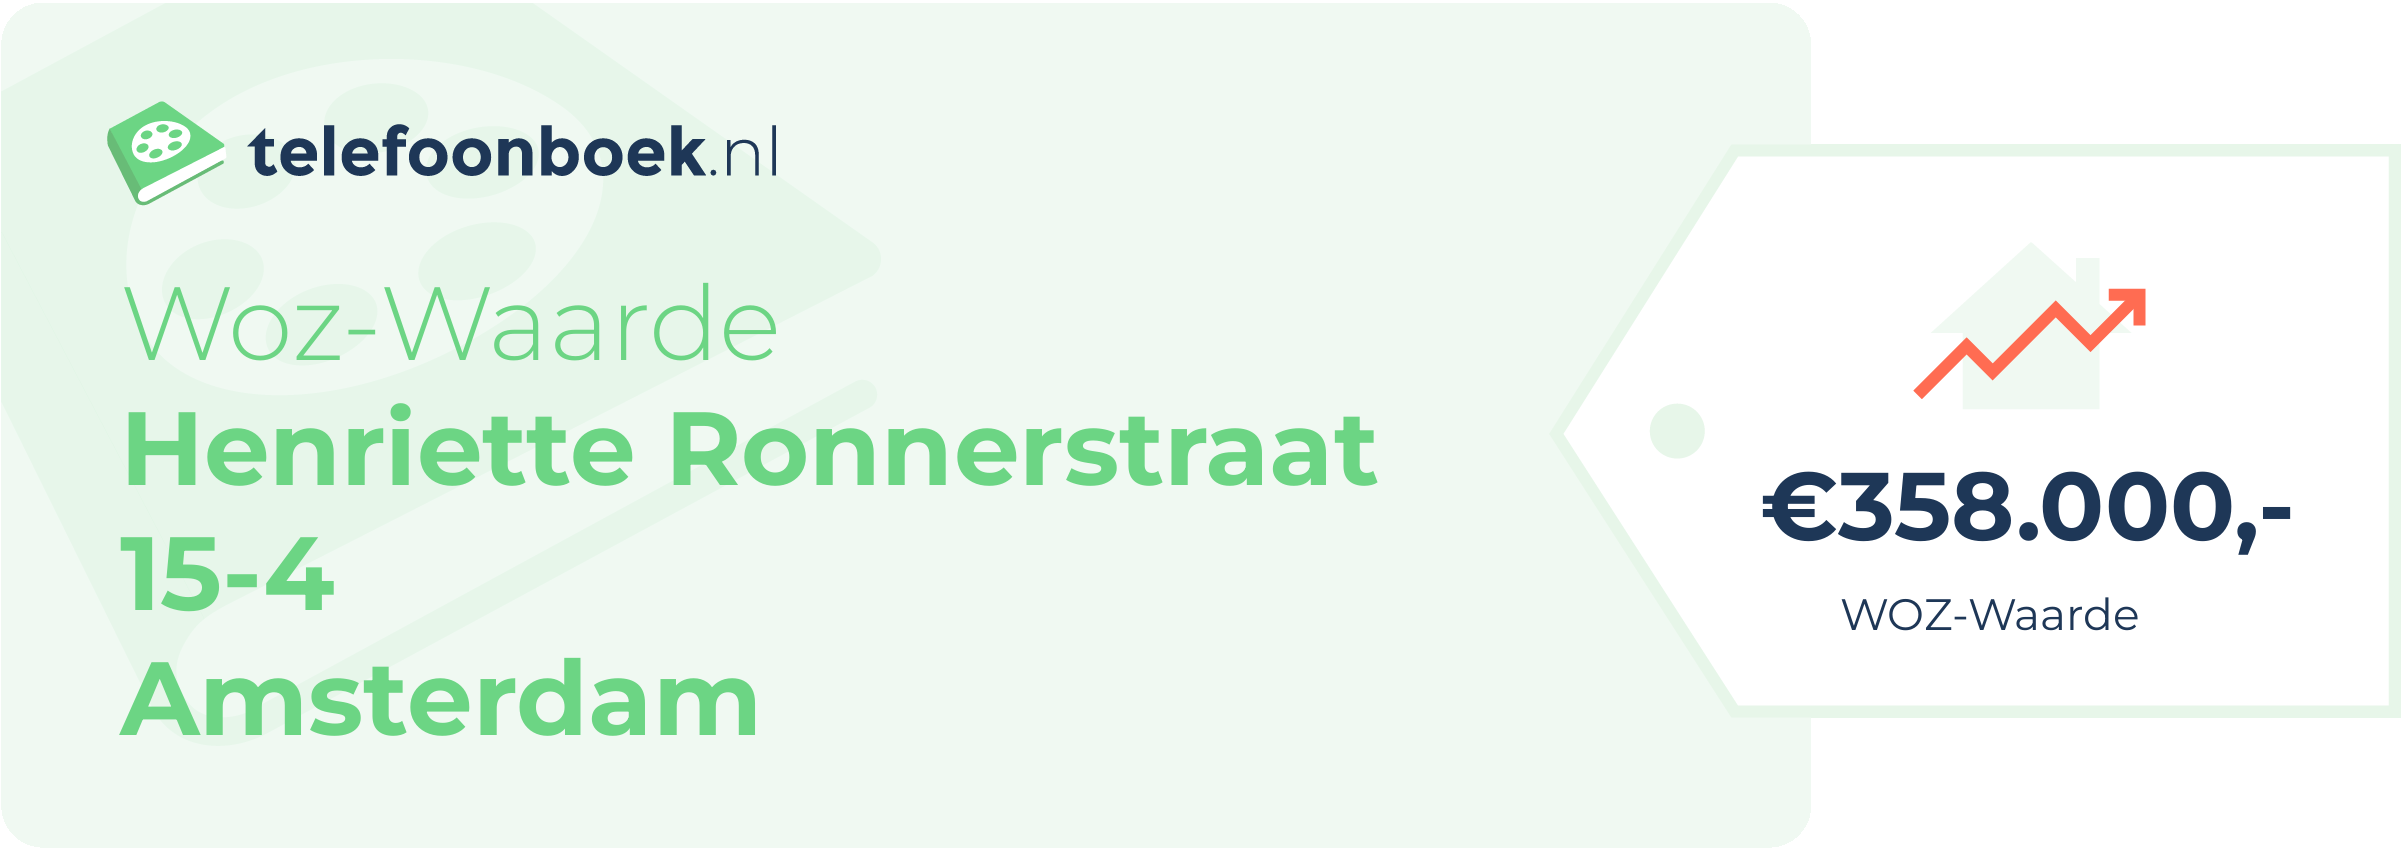 WOZ-waarde Henriette Ronnerstraat 15-4 Amsterdam